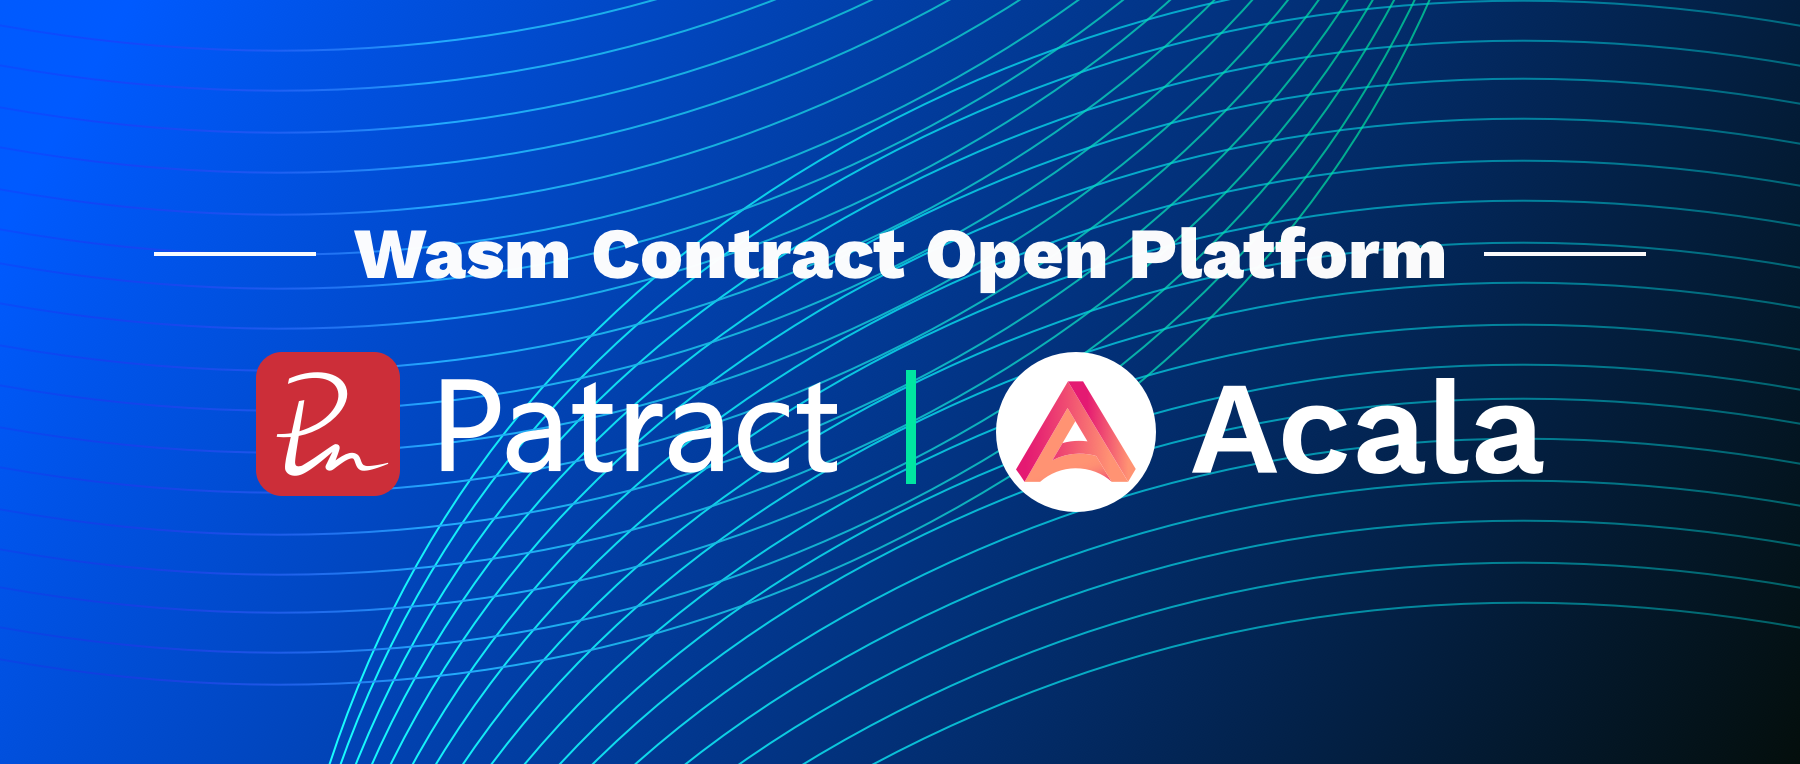 Patract转型为解决方案提供商，携手Acala首推Wasm合约开放平台计划